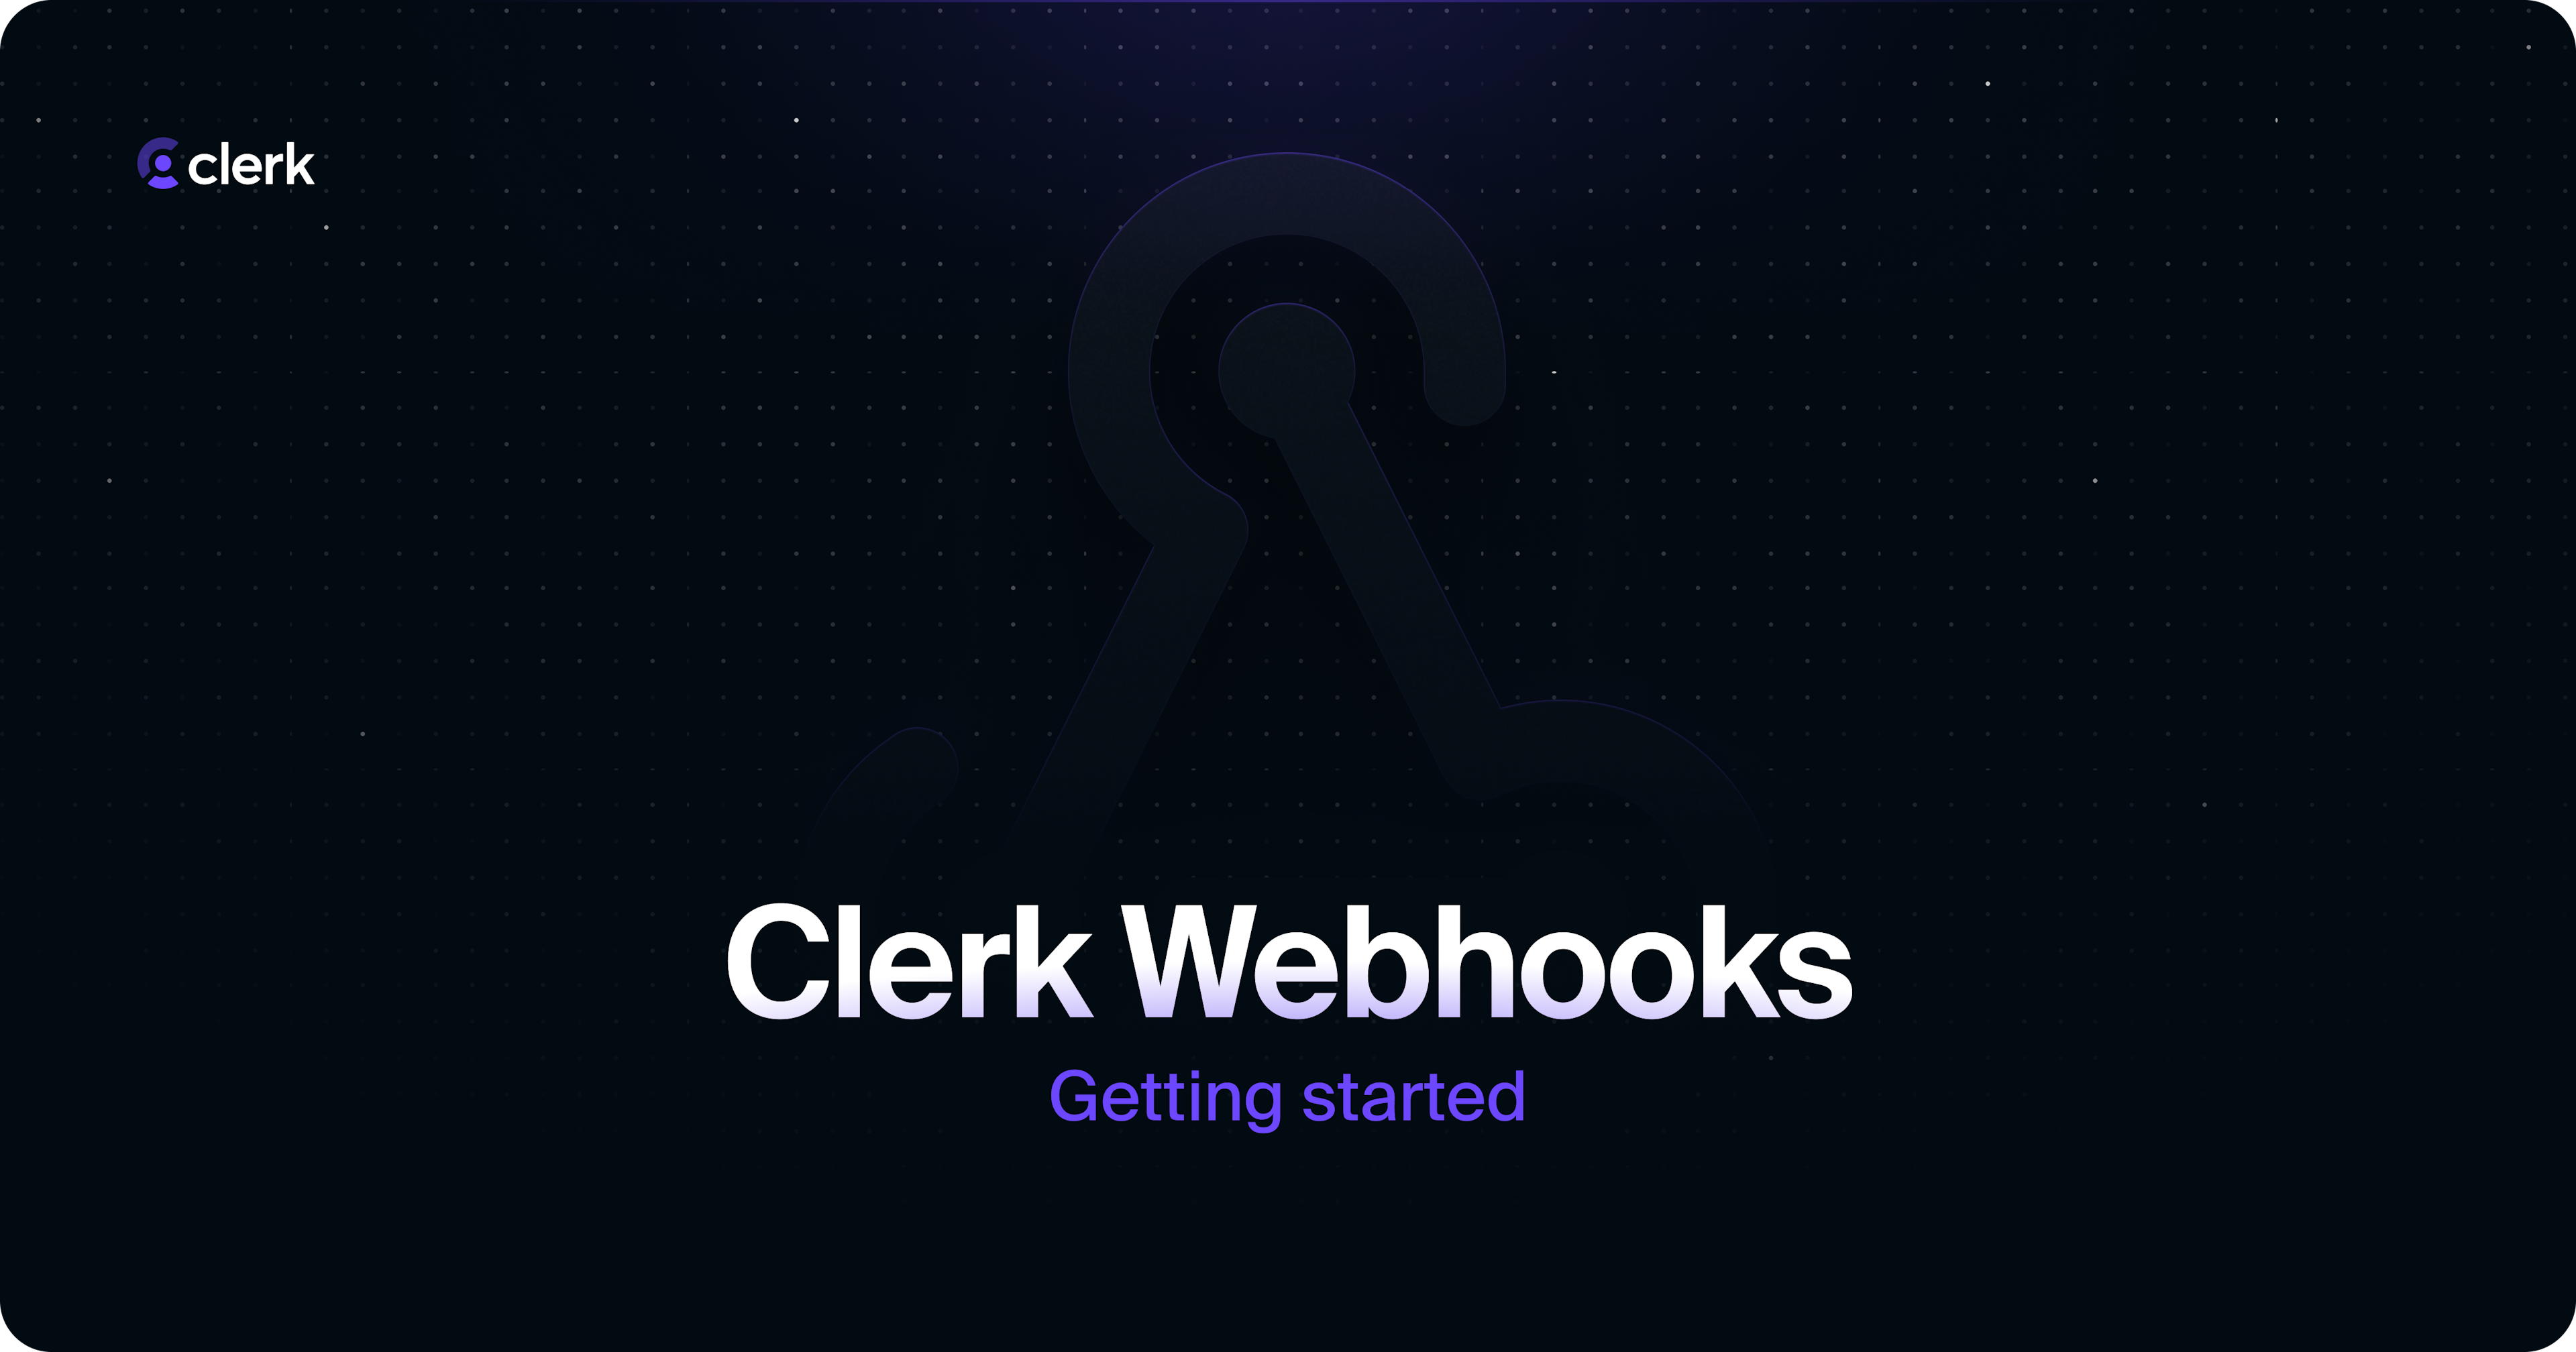 Clerk Webhooks: Getting Started